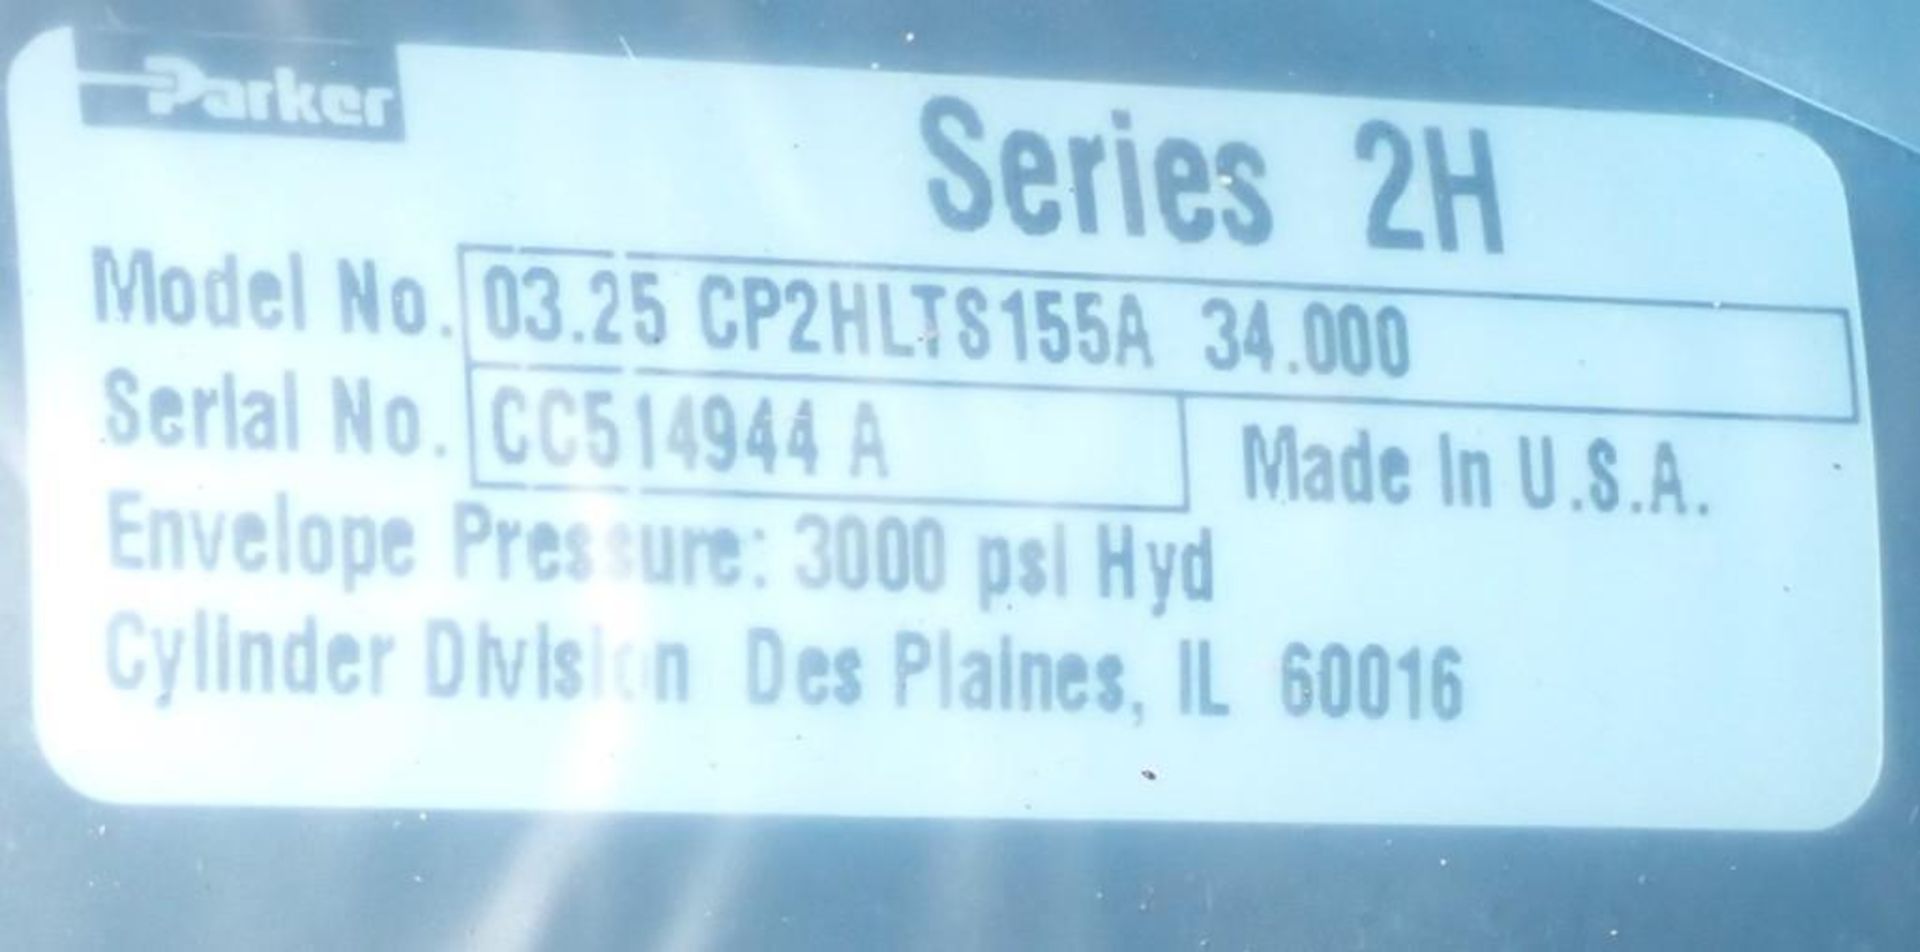 Parker #03.25 CP2HLTS155A 34.000 Series 2H Cylinder - Image 3 of 3